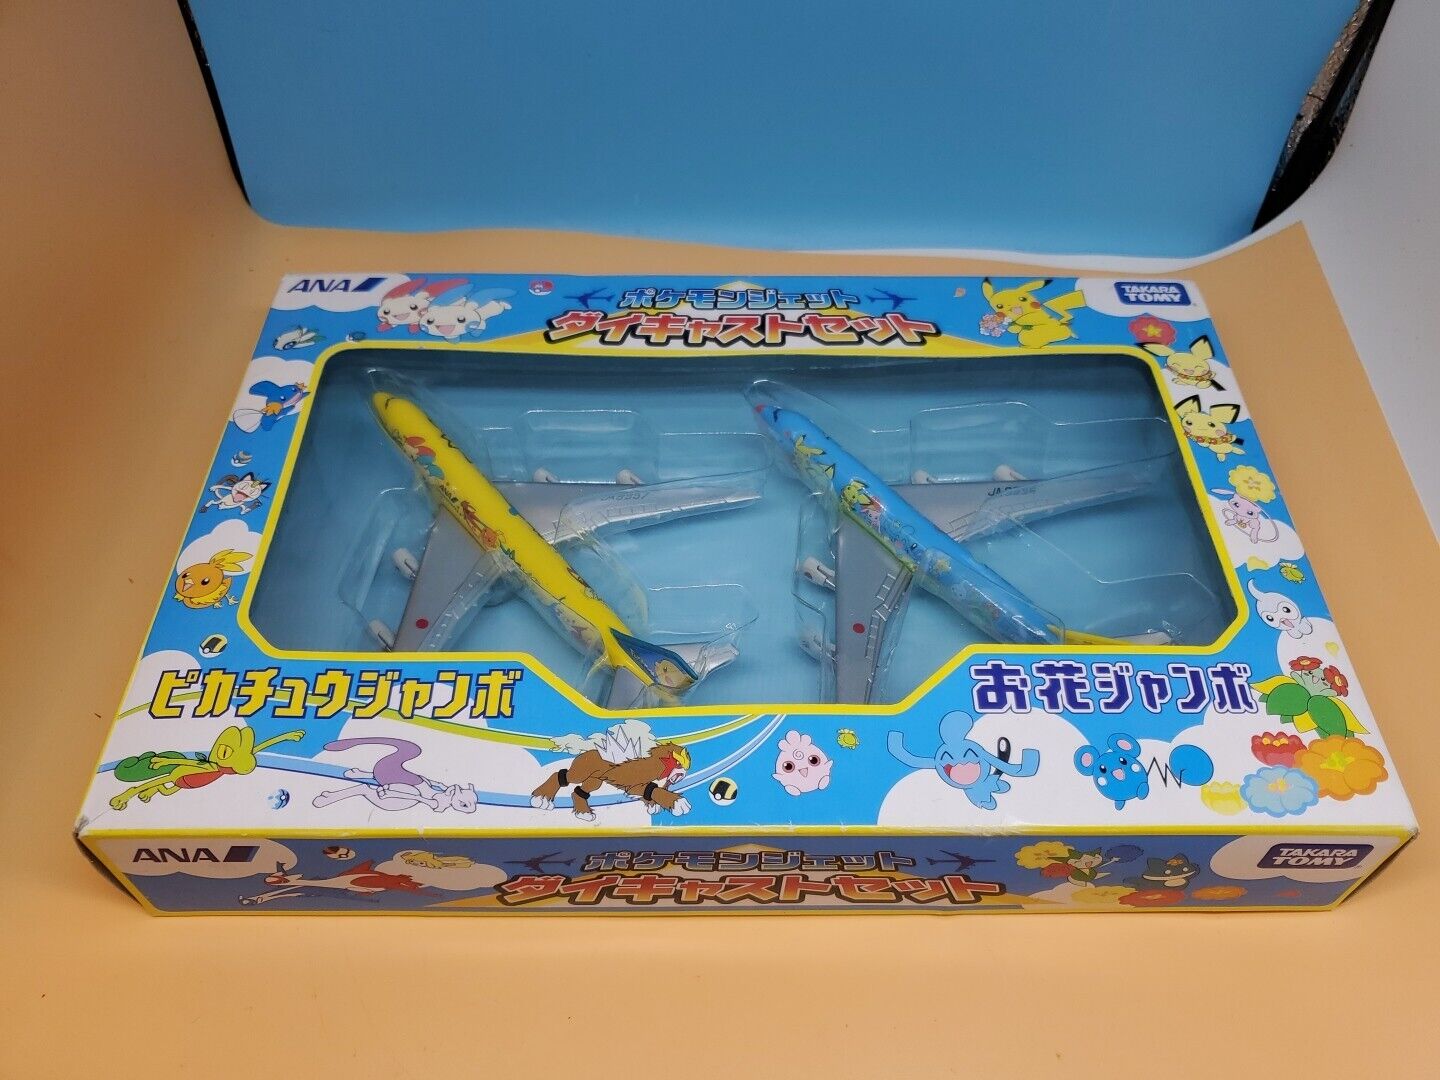 RARE Vintage Pokemon ANA Toy Set Scale JA8957 JA8956 Airplanes Tomy Takara 2004